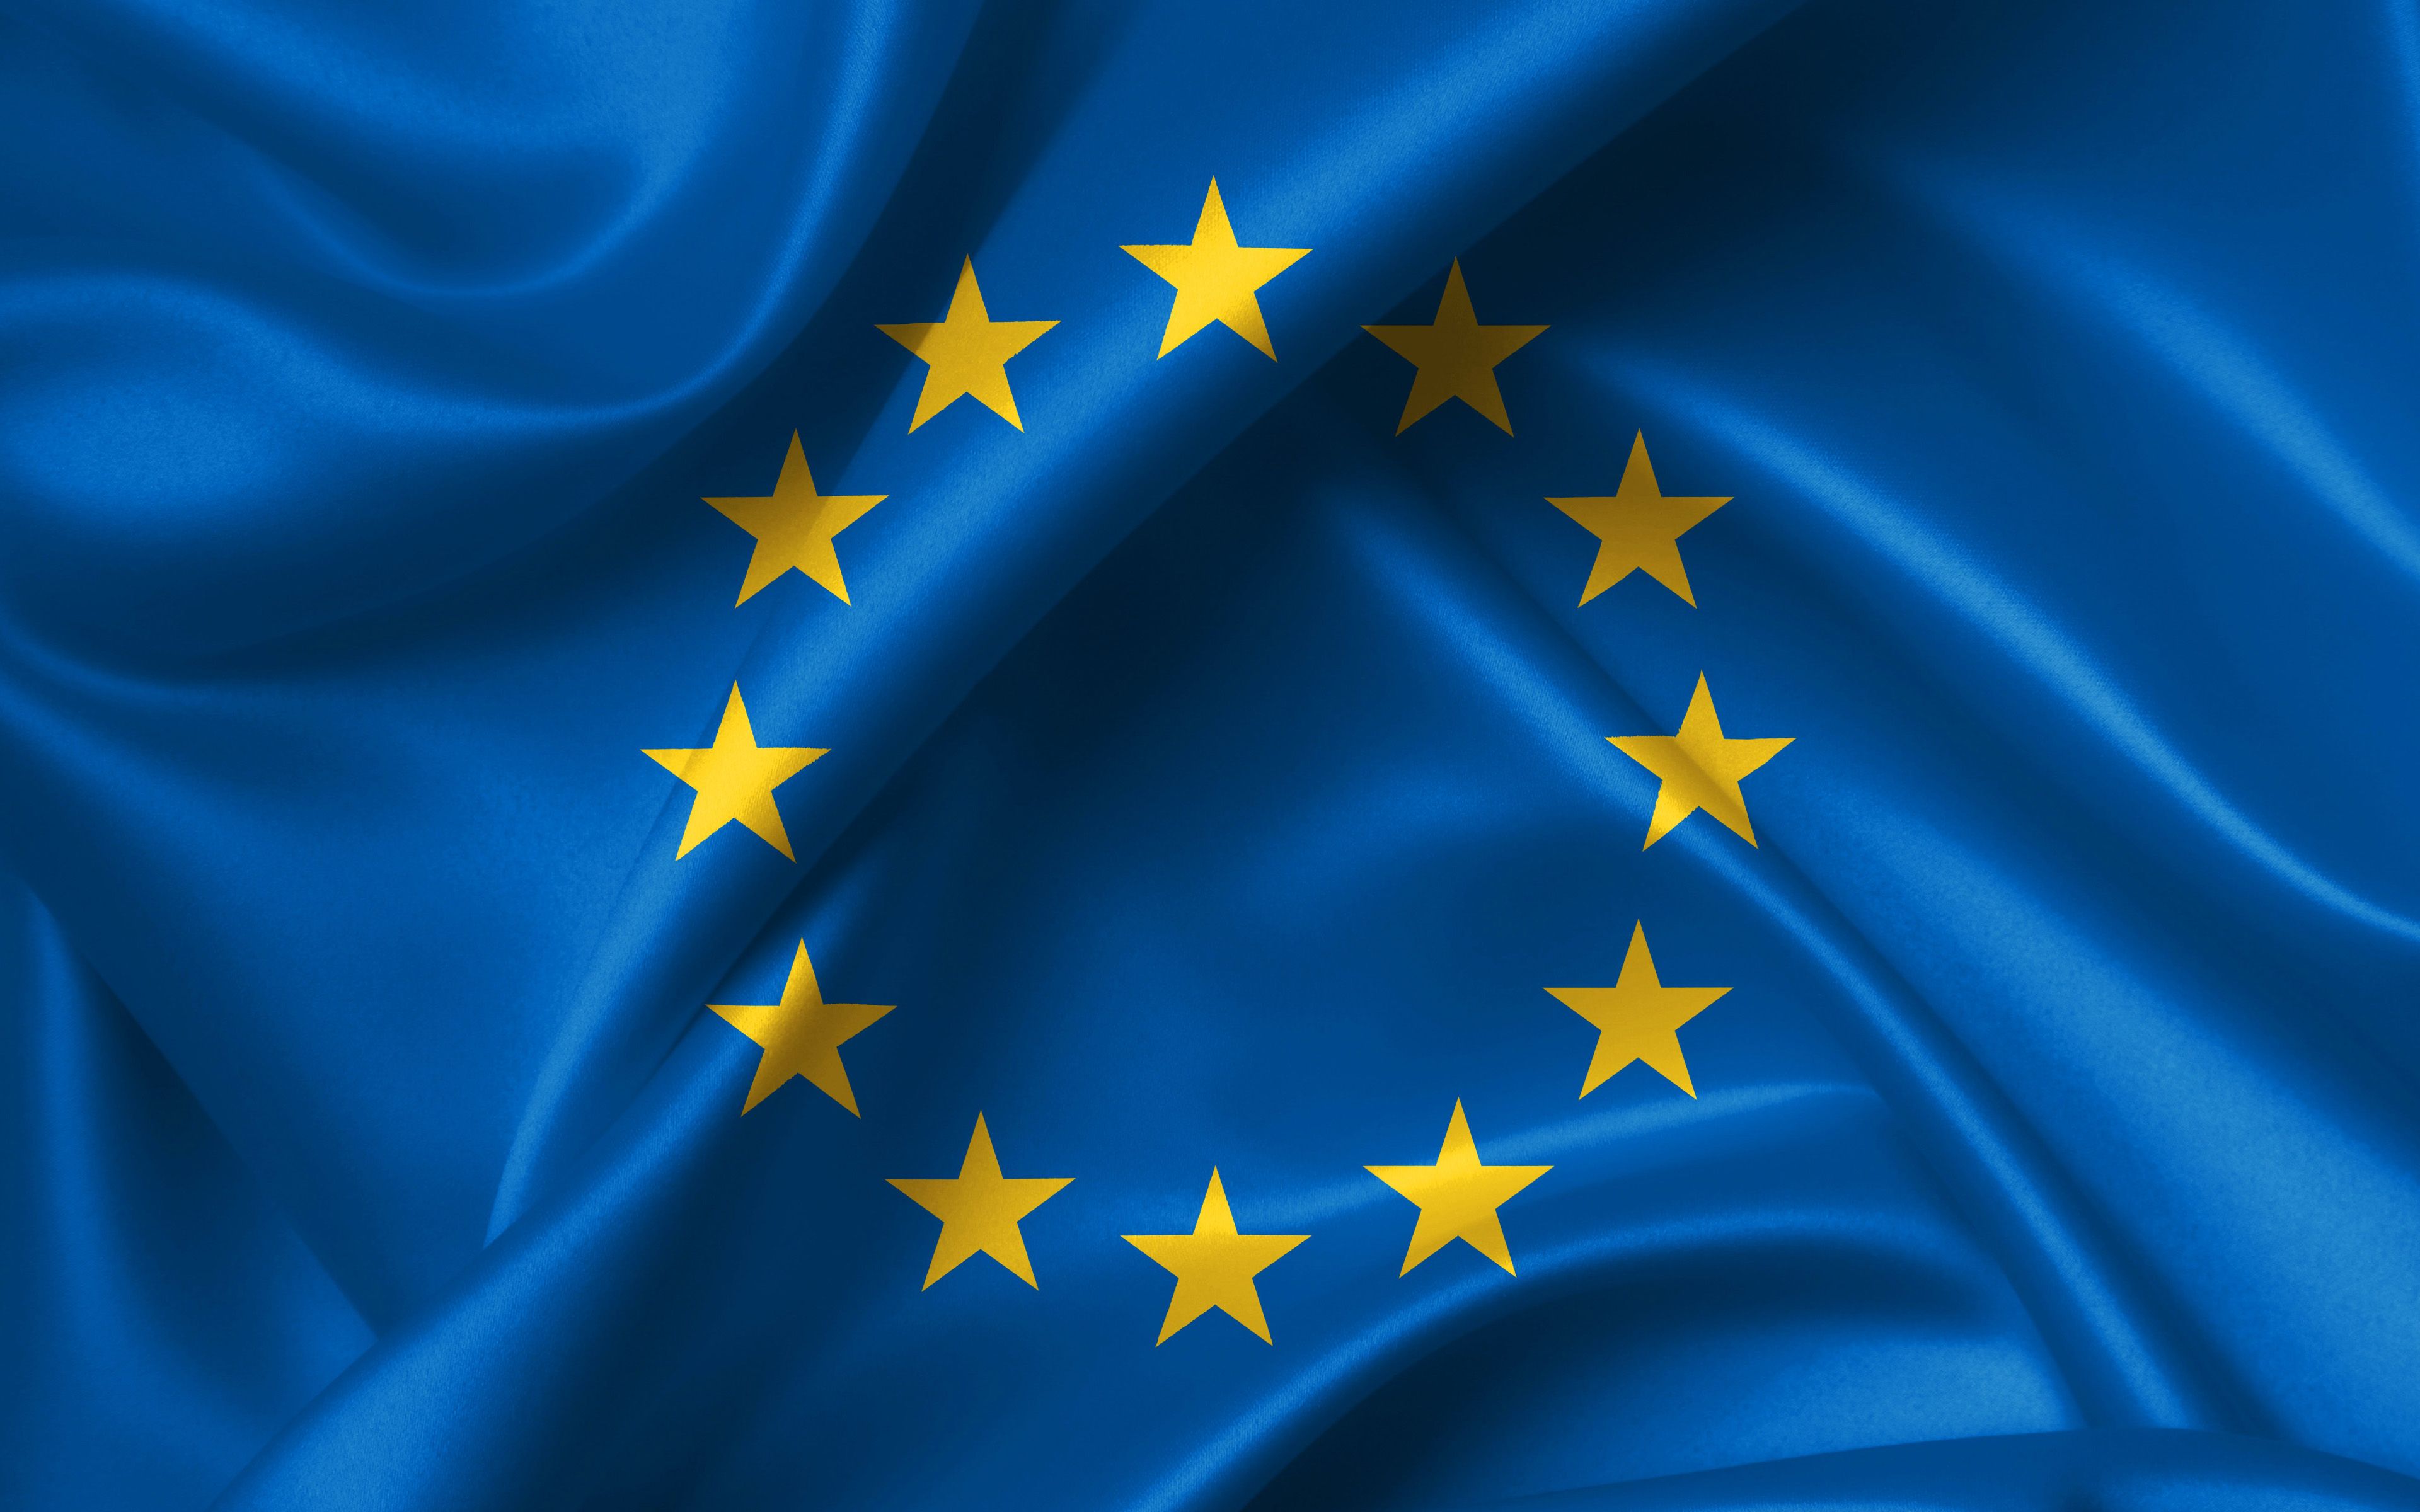 Download wallpaper 4k, European Union flag, silk flag, Europe, national symbols, Flag of European Union, EU flag, European Union, European countries, European Union fabic flag for desktop with resolution 3840x2400. High Quality